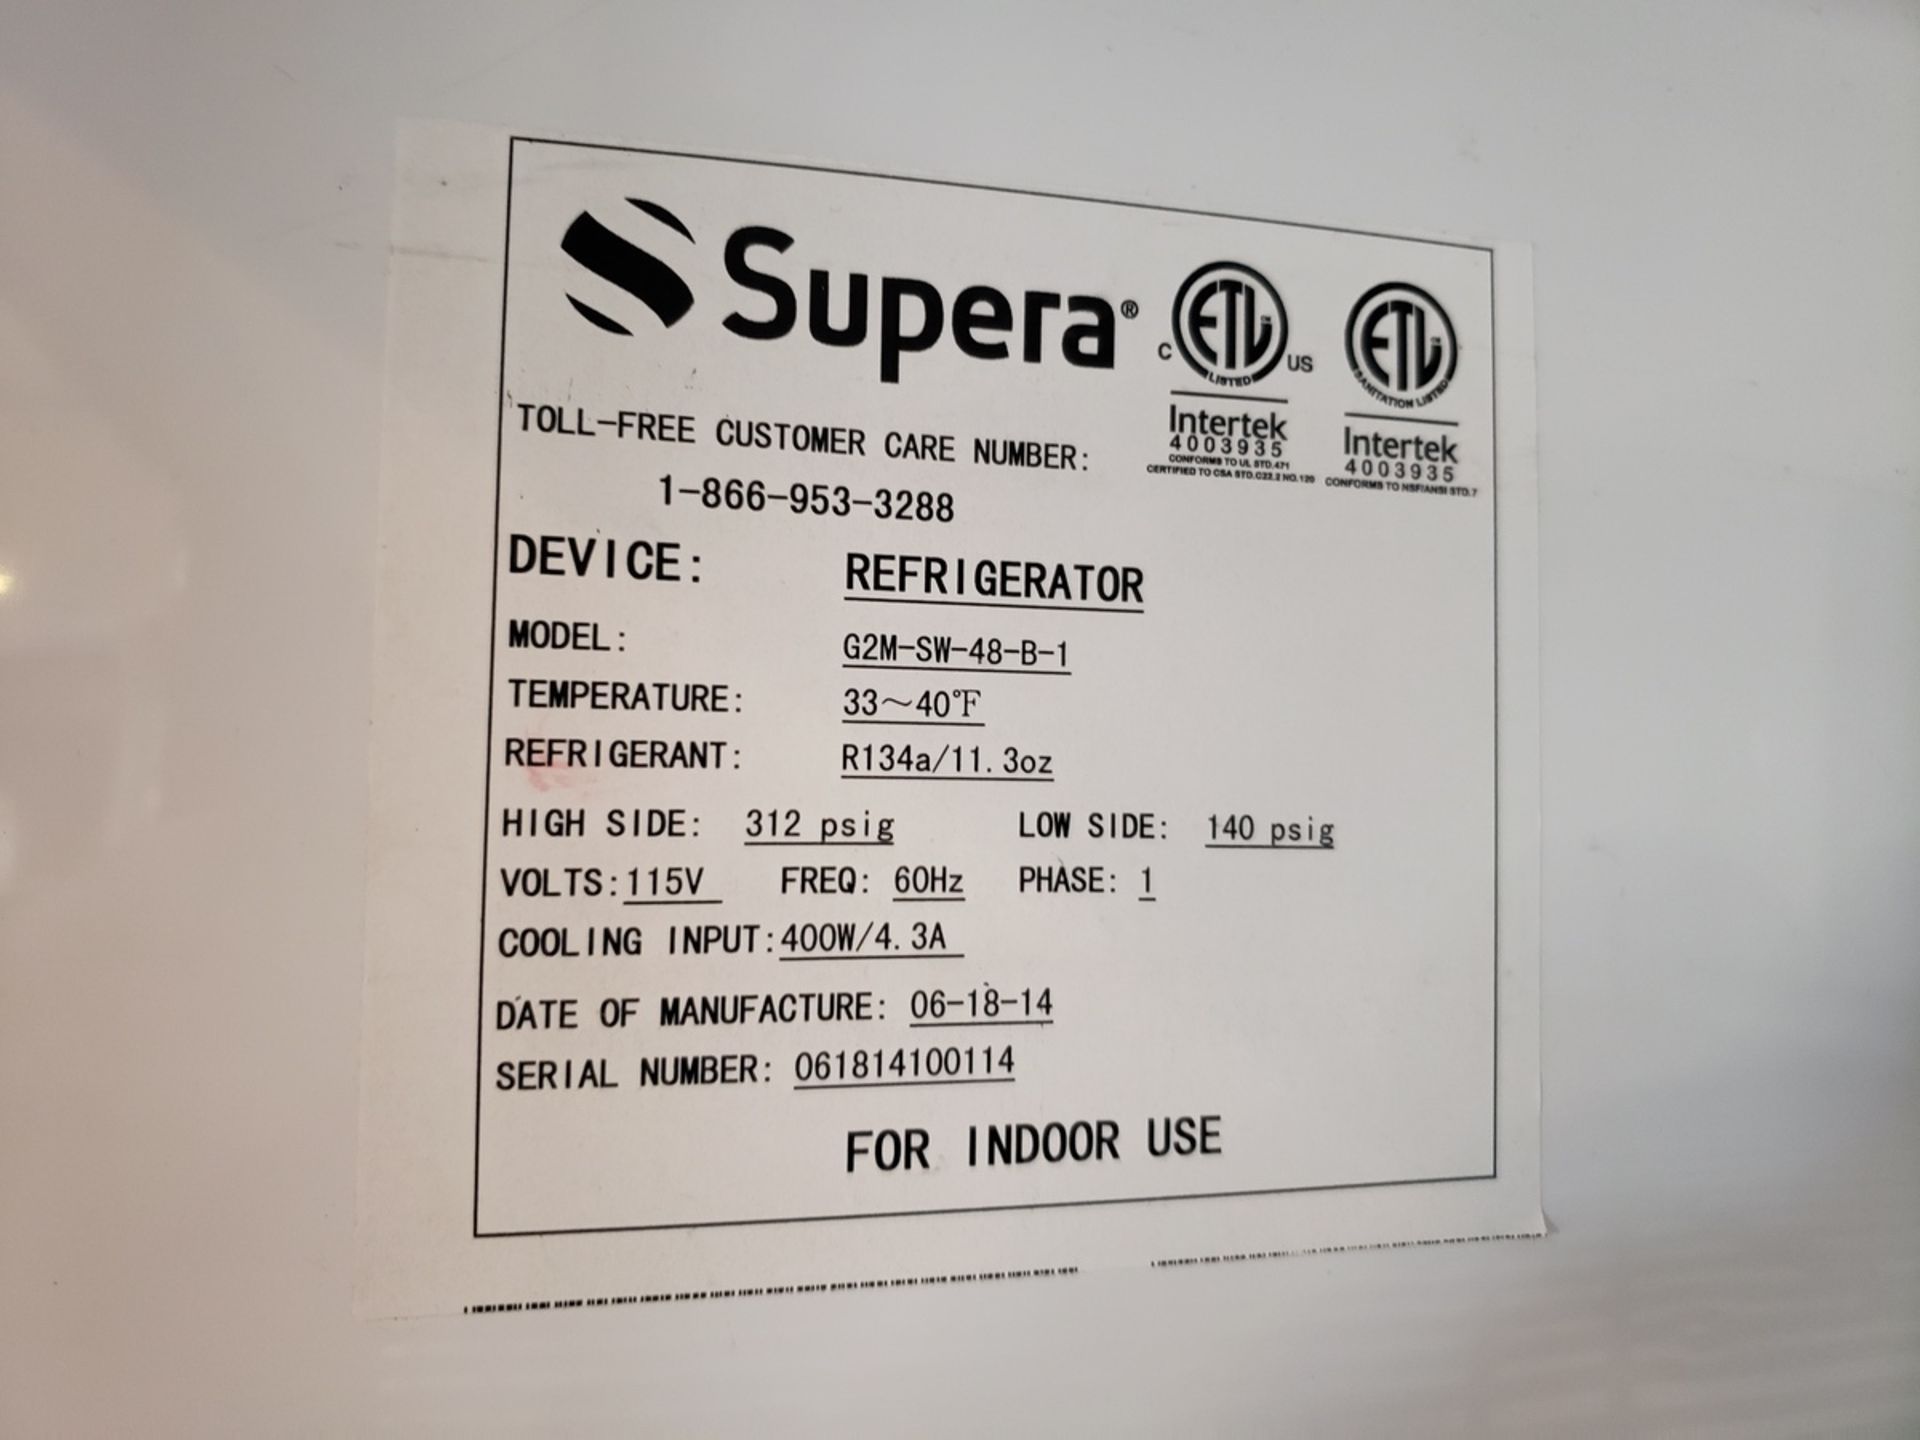 Supera Double Door Refrigerator, M# G2M-SW-48-B-1, S/N 061814100114 | Rig Fee: $150 - Image 2 of 2